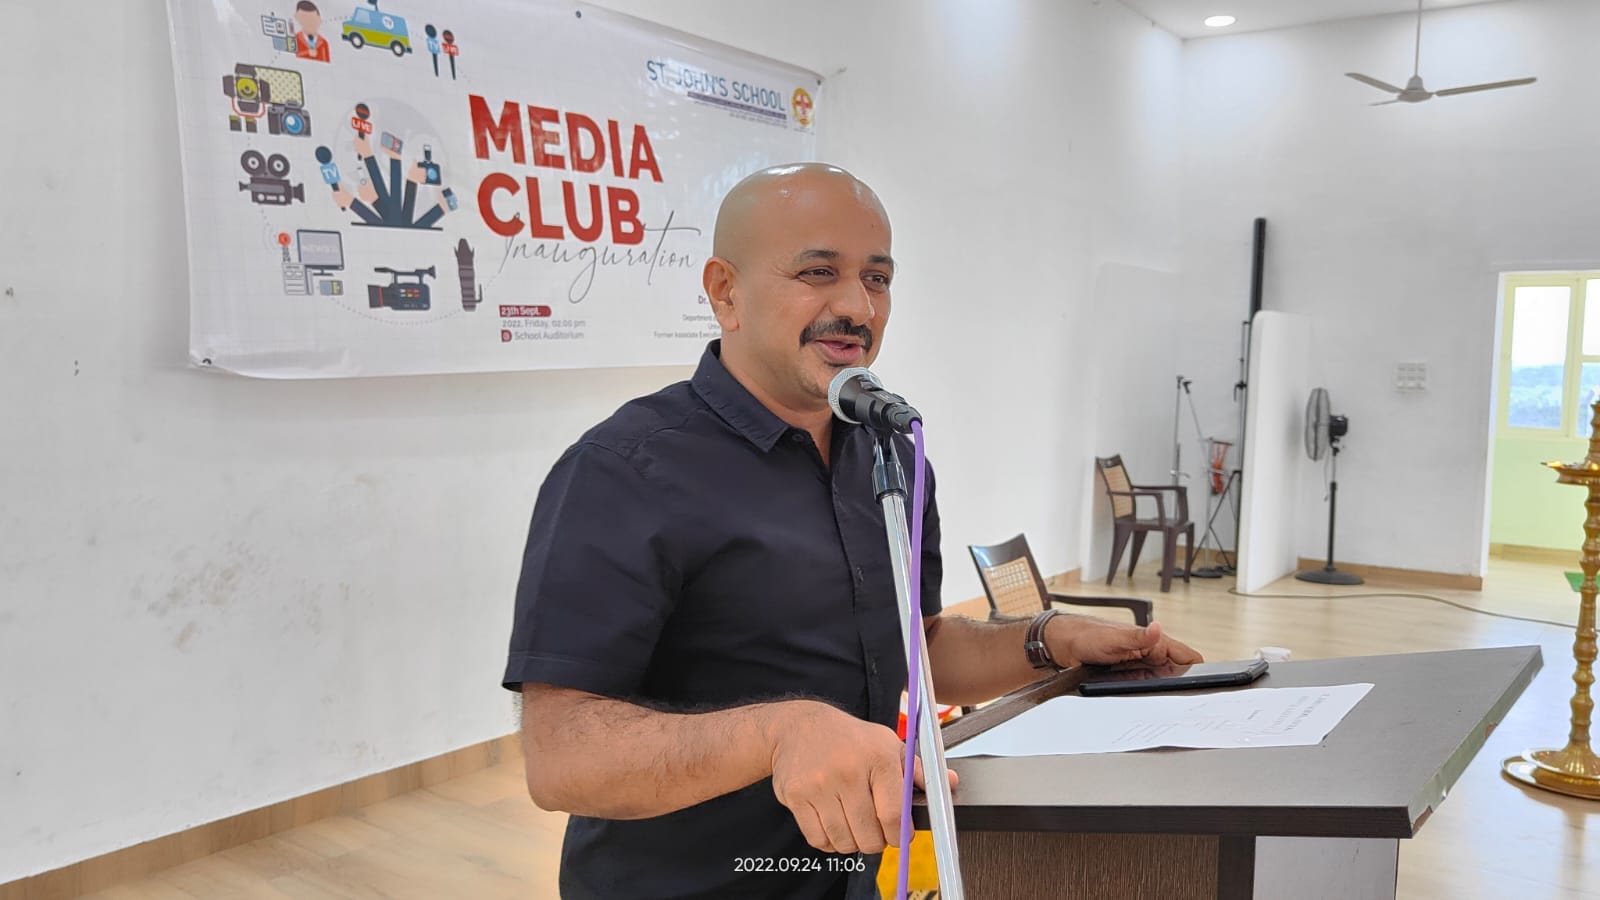 Media Club Inauguration 2022